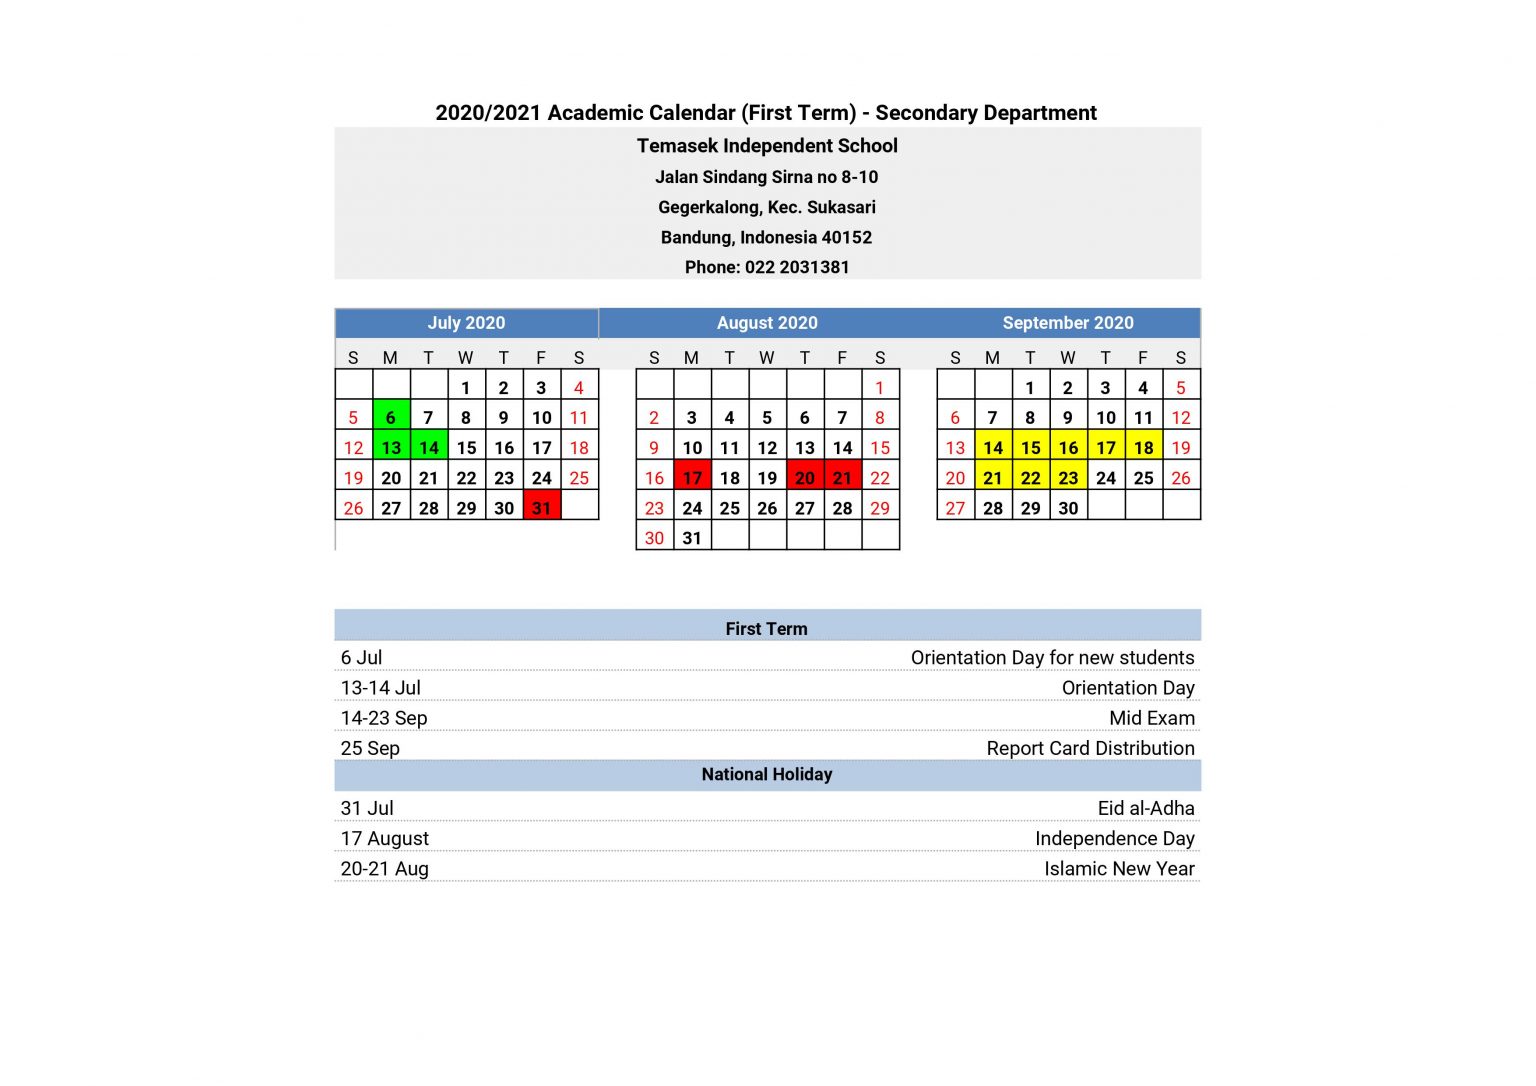 Academic Calendar Secondary Temasek Independent School Bandung